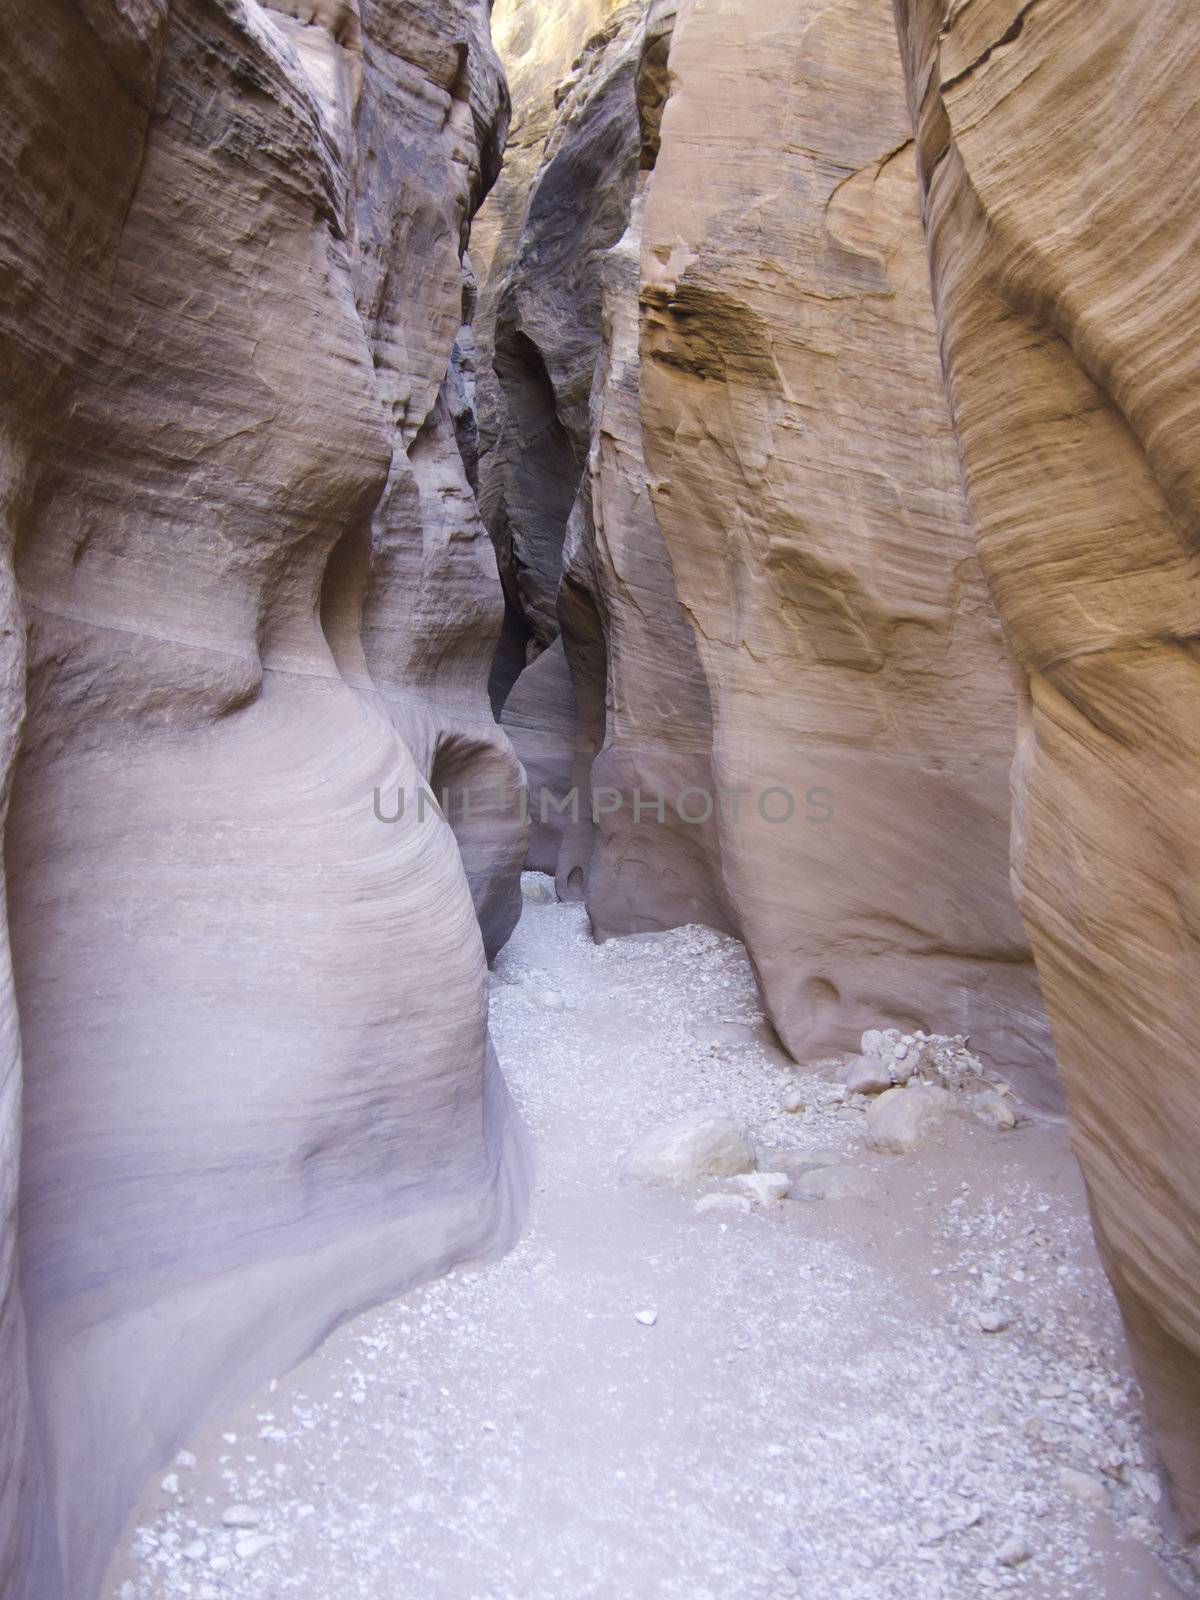 slot canyon southern utah by kjcimagery